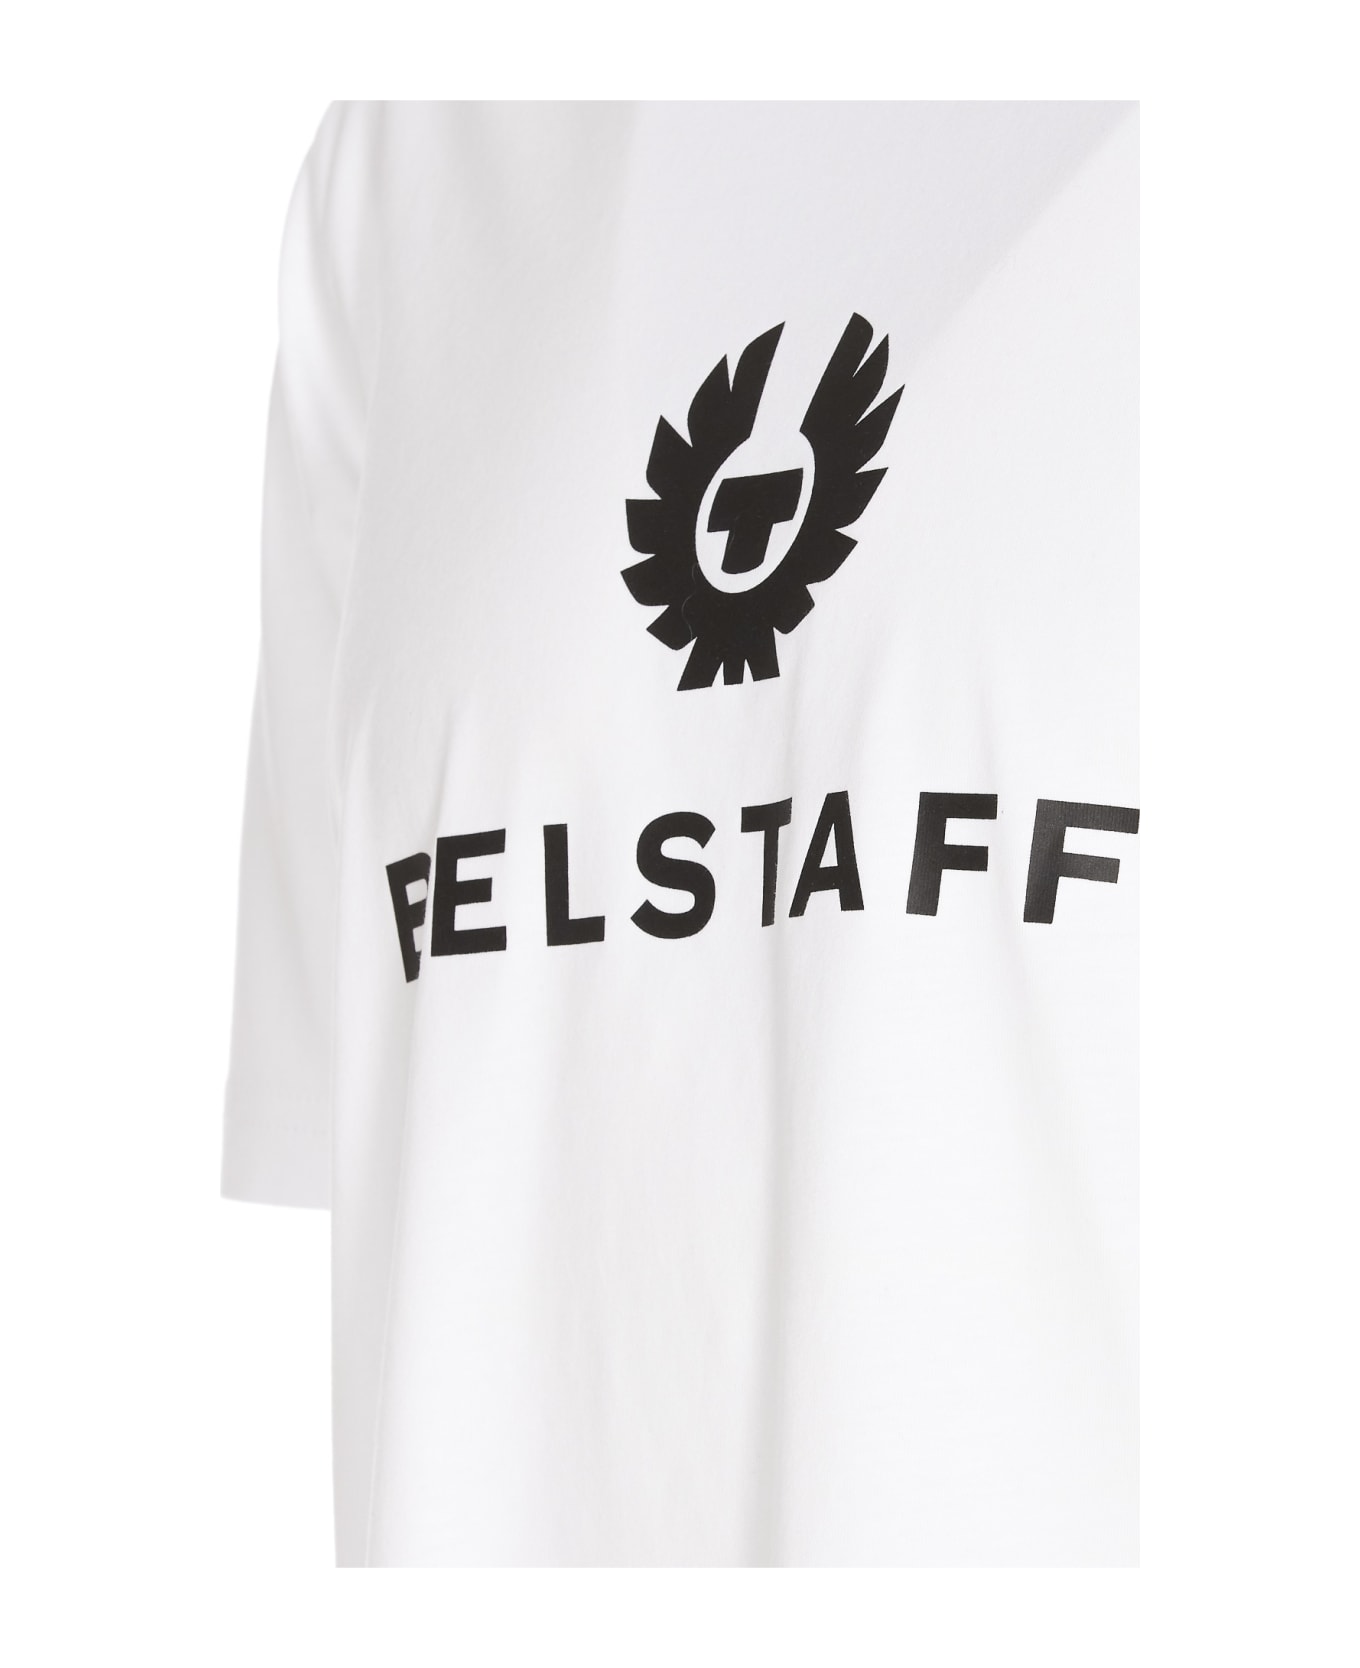 Belstaff Logo Signature T-shirt - White